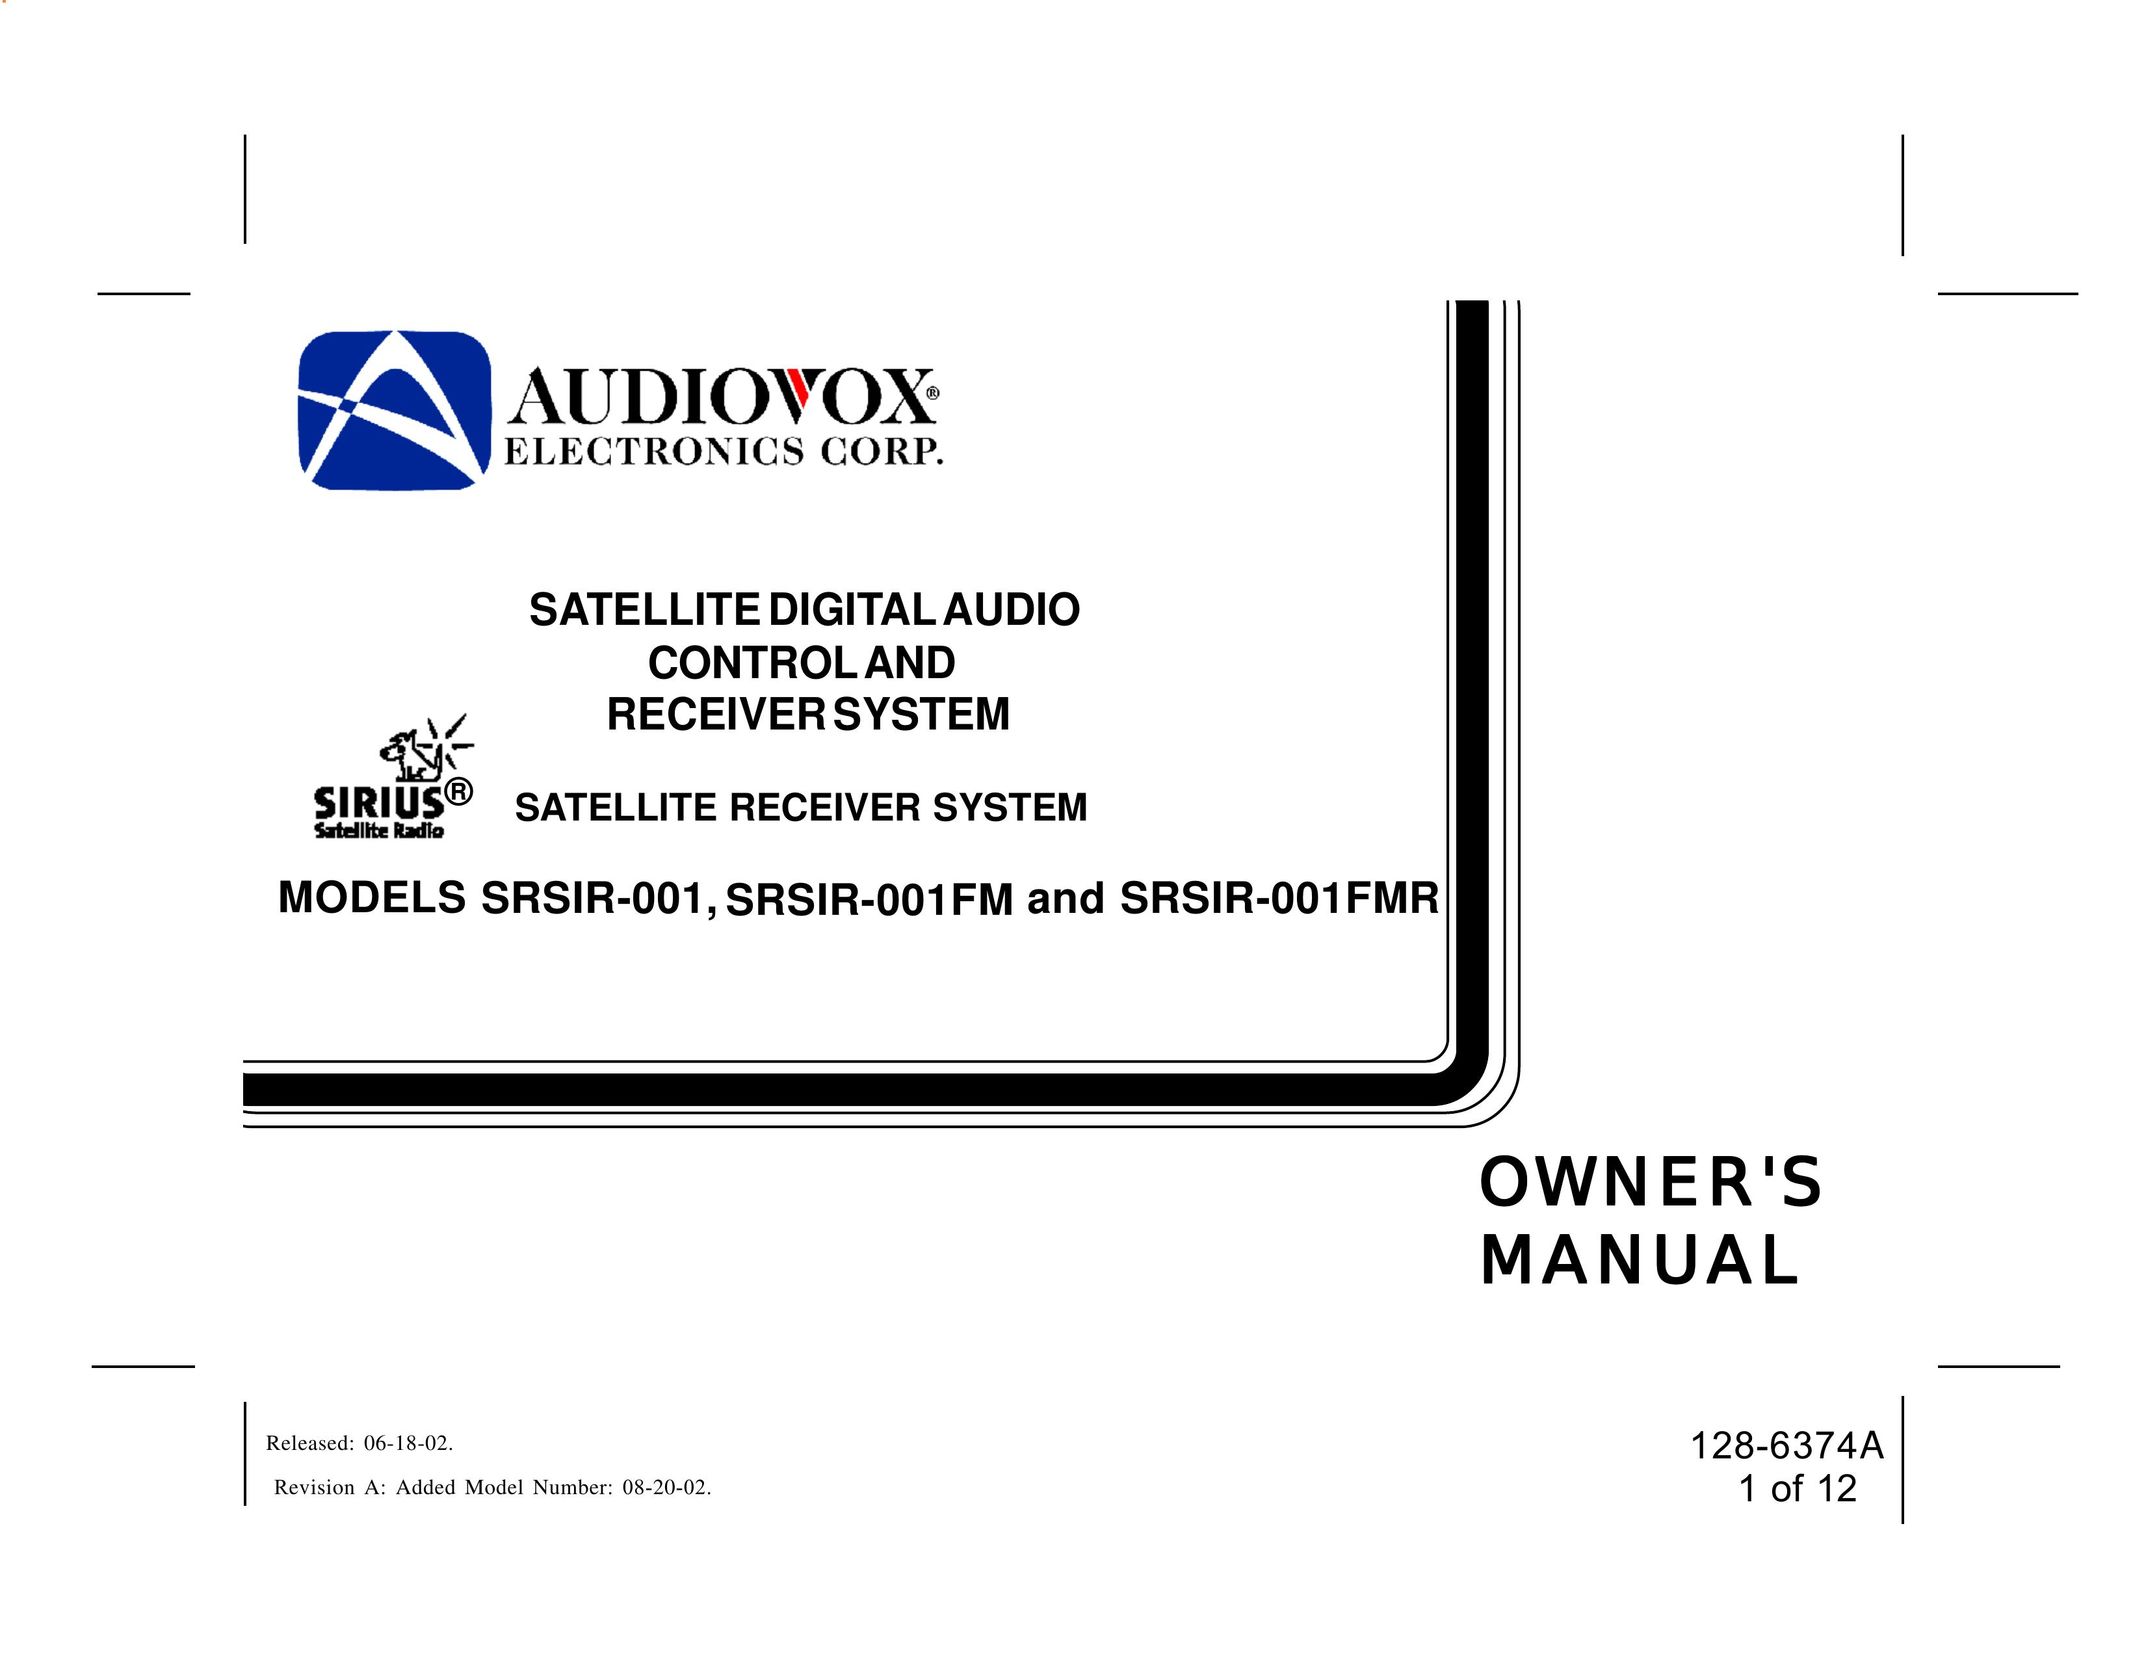 Audiovox SRSIR-001FM, SRSIR-001FMR Satellite TV System User Manual